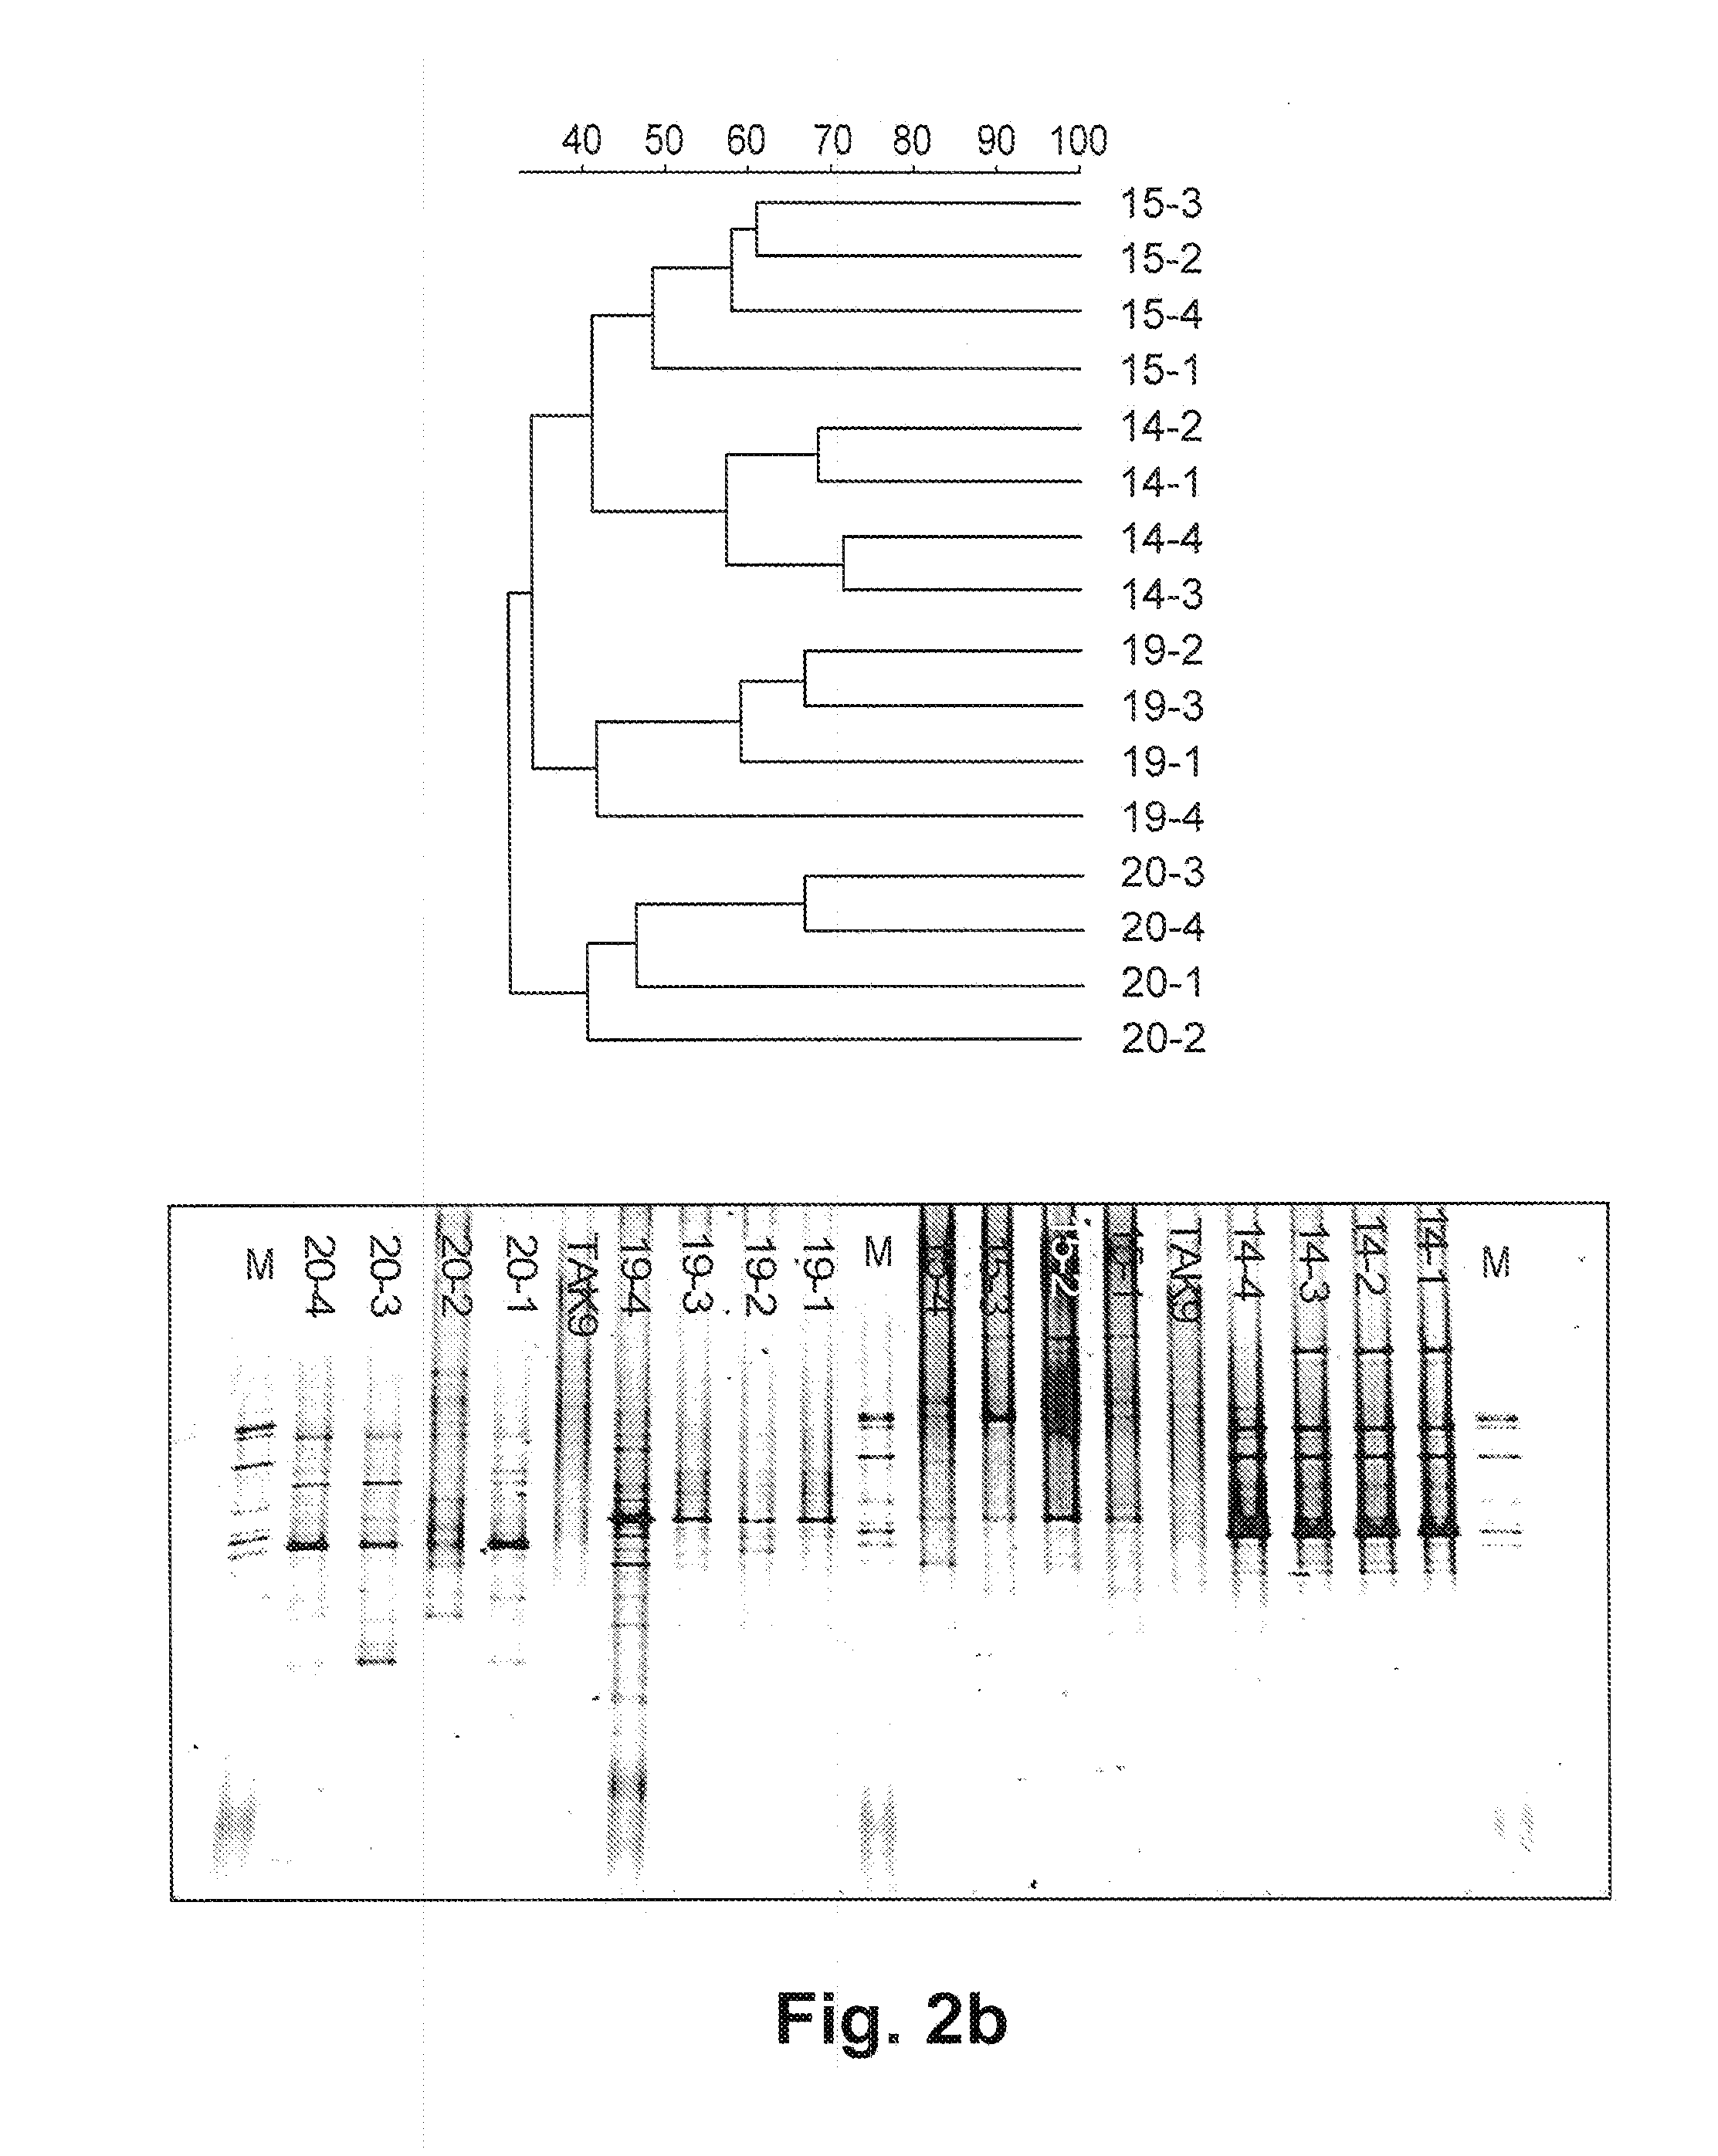 Lactobacillus plantarum inducia dsm 21379 as enhancer of cellular immunity, hypocholesterolemic and Anti-oxidative agent and antimicrobial agent against clostridium difficile